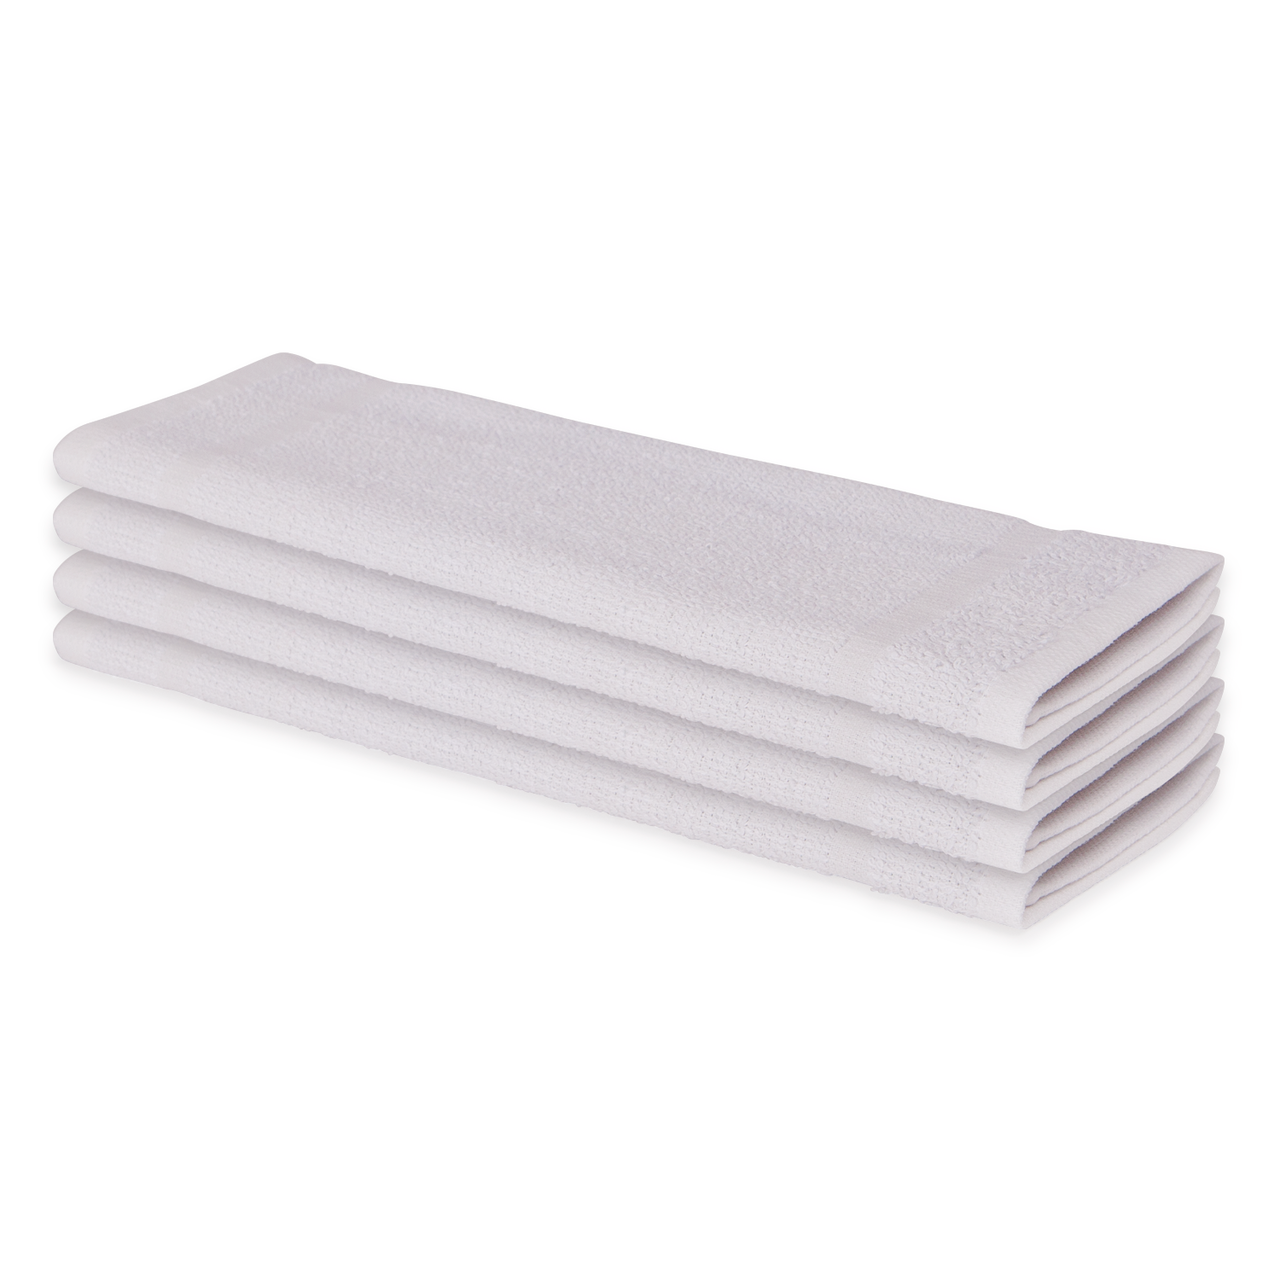 Economy Wash Cloth 100% Cotton 12X12 1 LB WHITE - PKG of 60